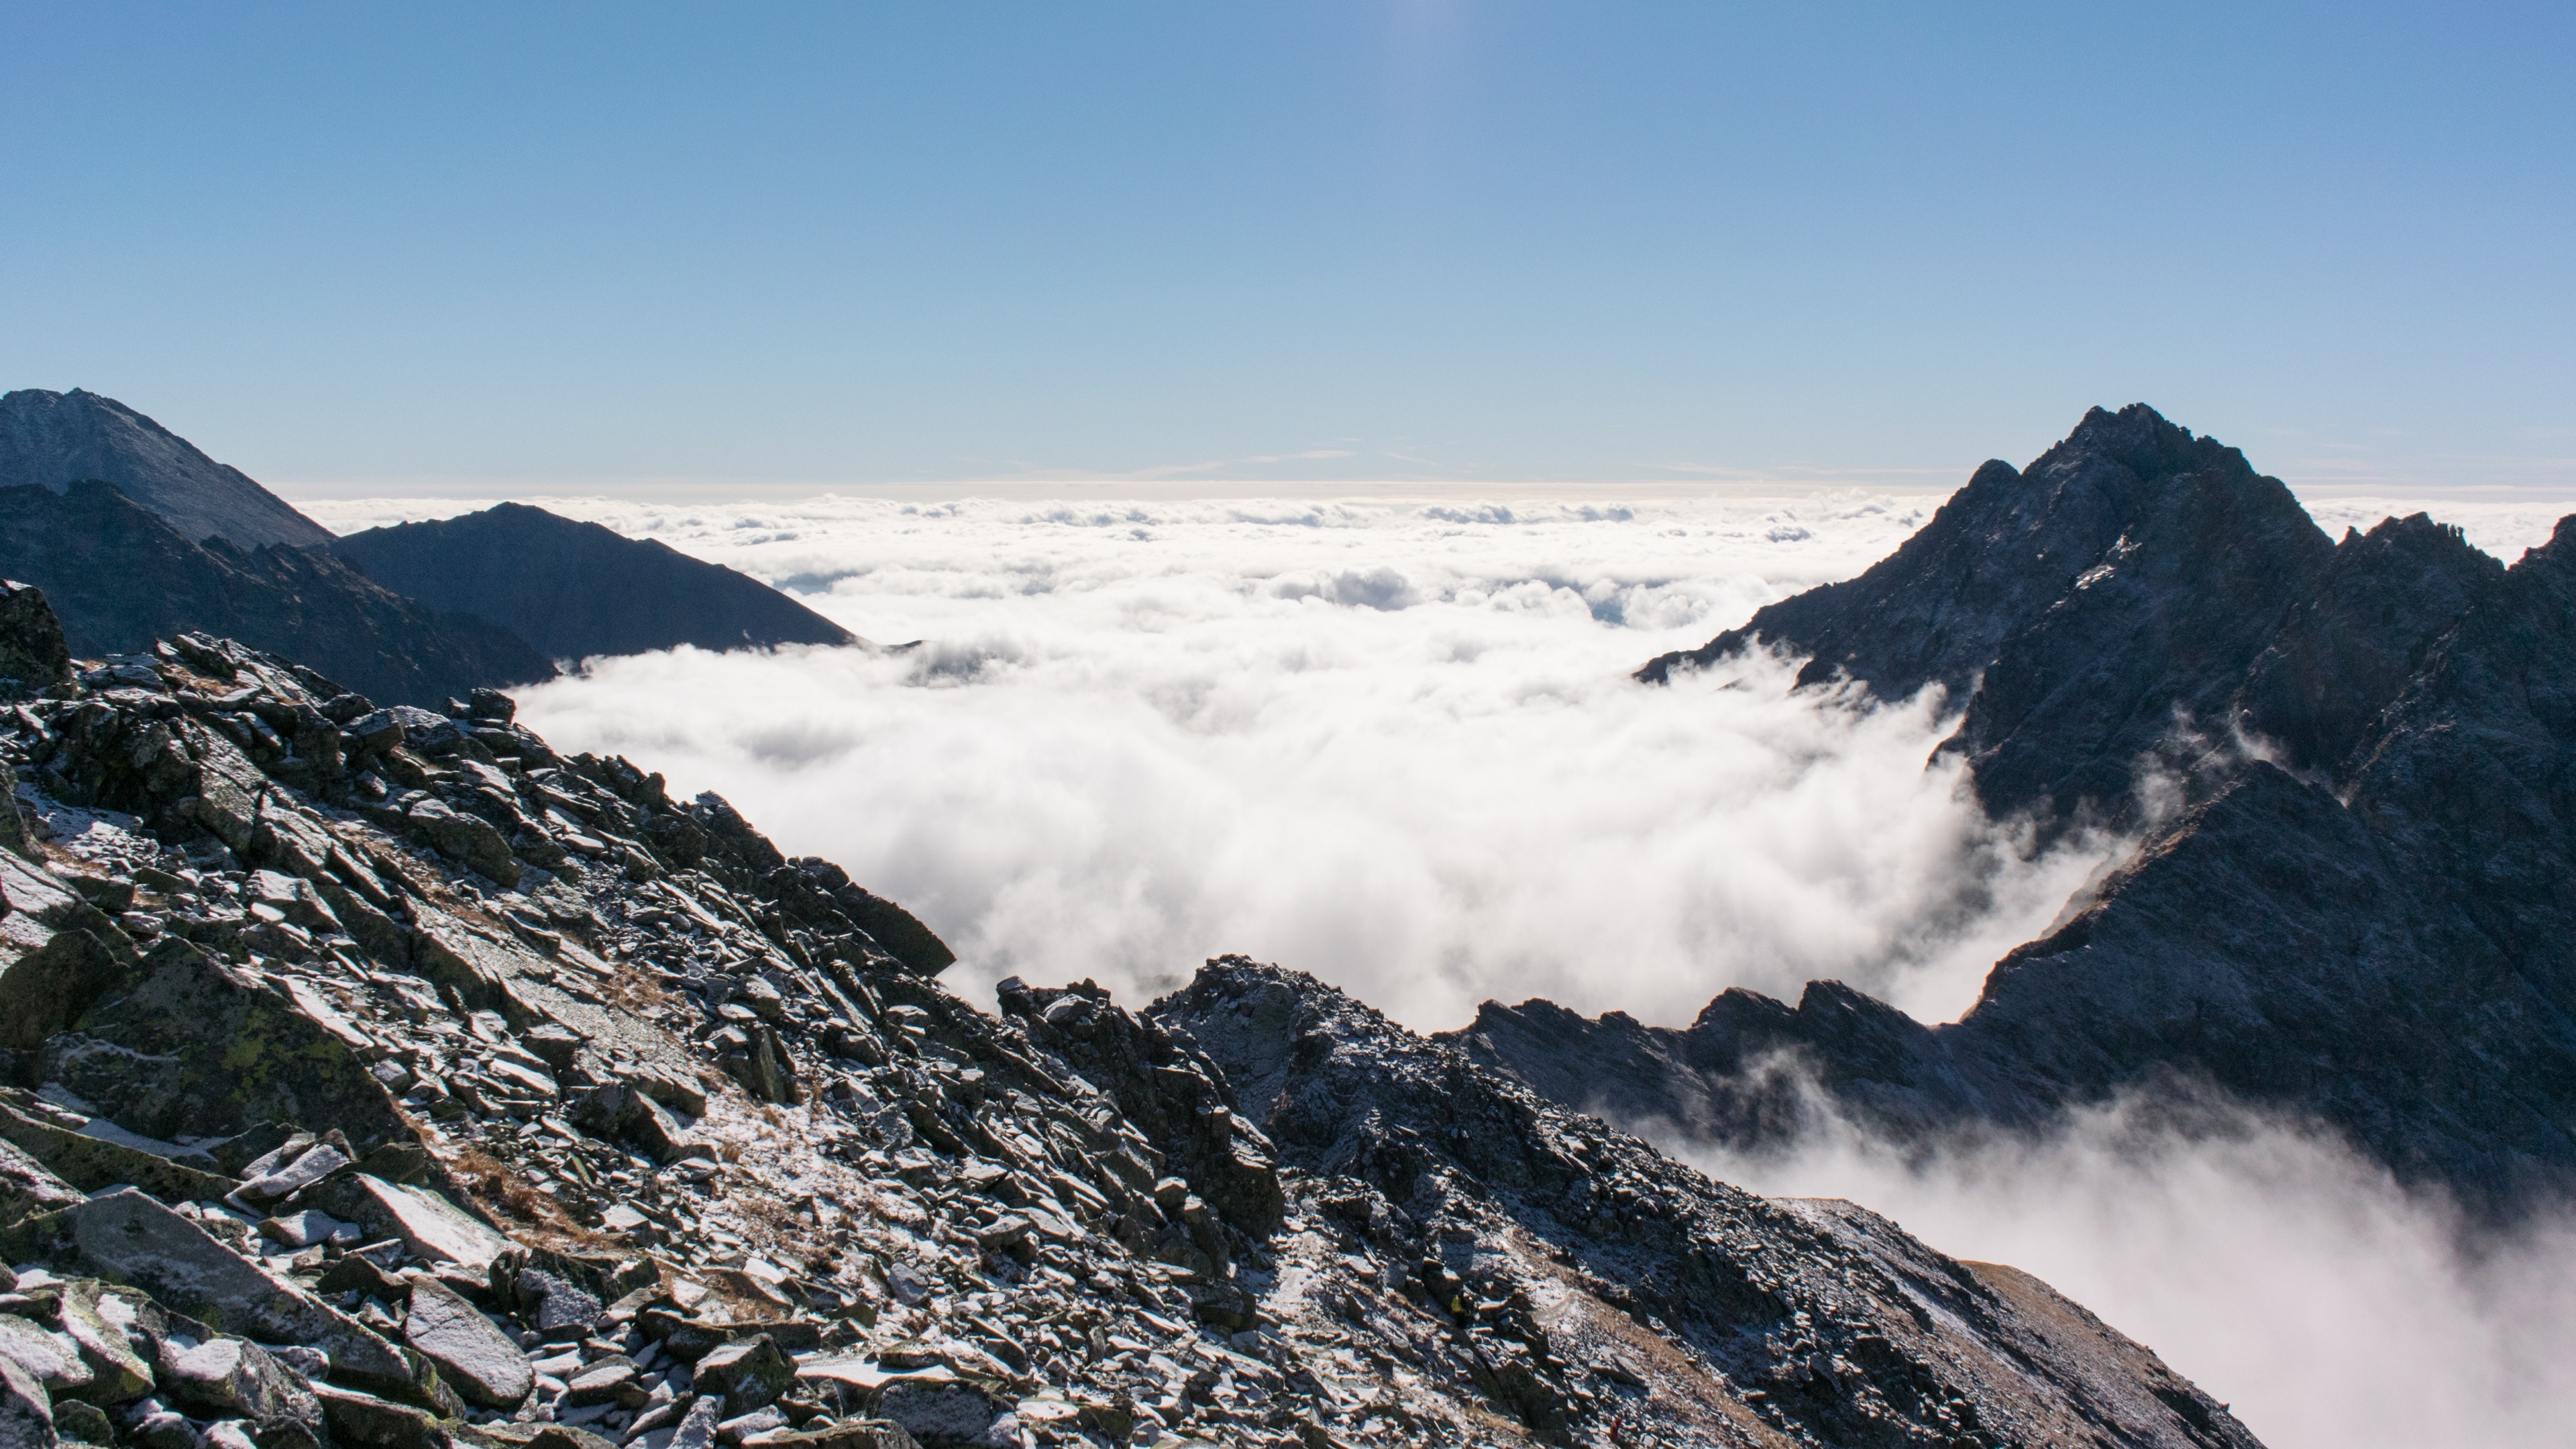 General 3840x2160 nature landscape mountains clouds mist rocks stones Tatra Mountains Slovakia